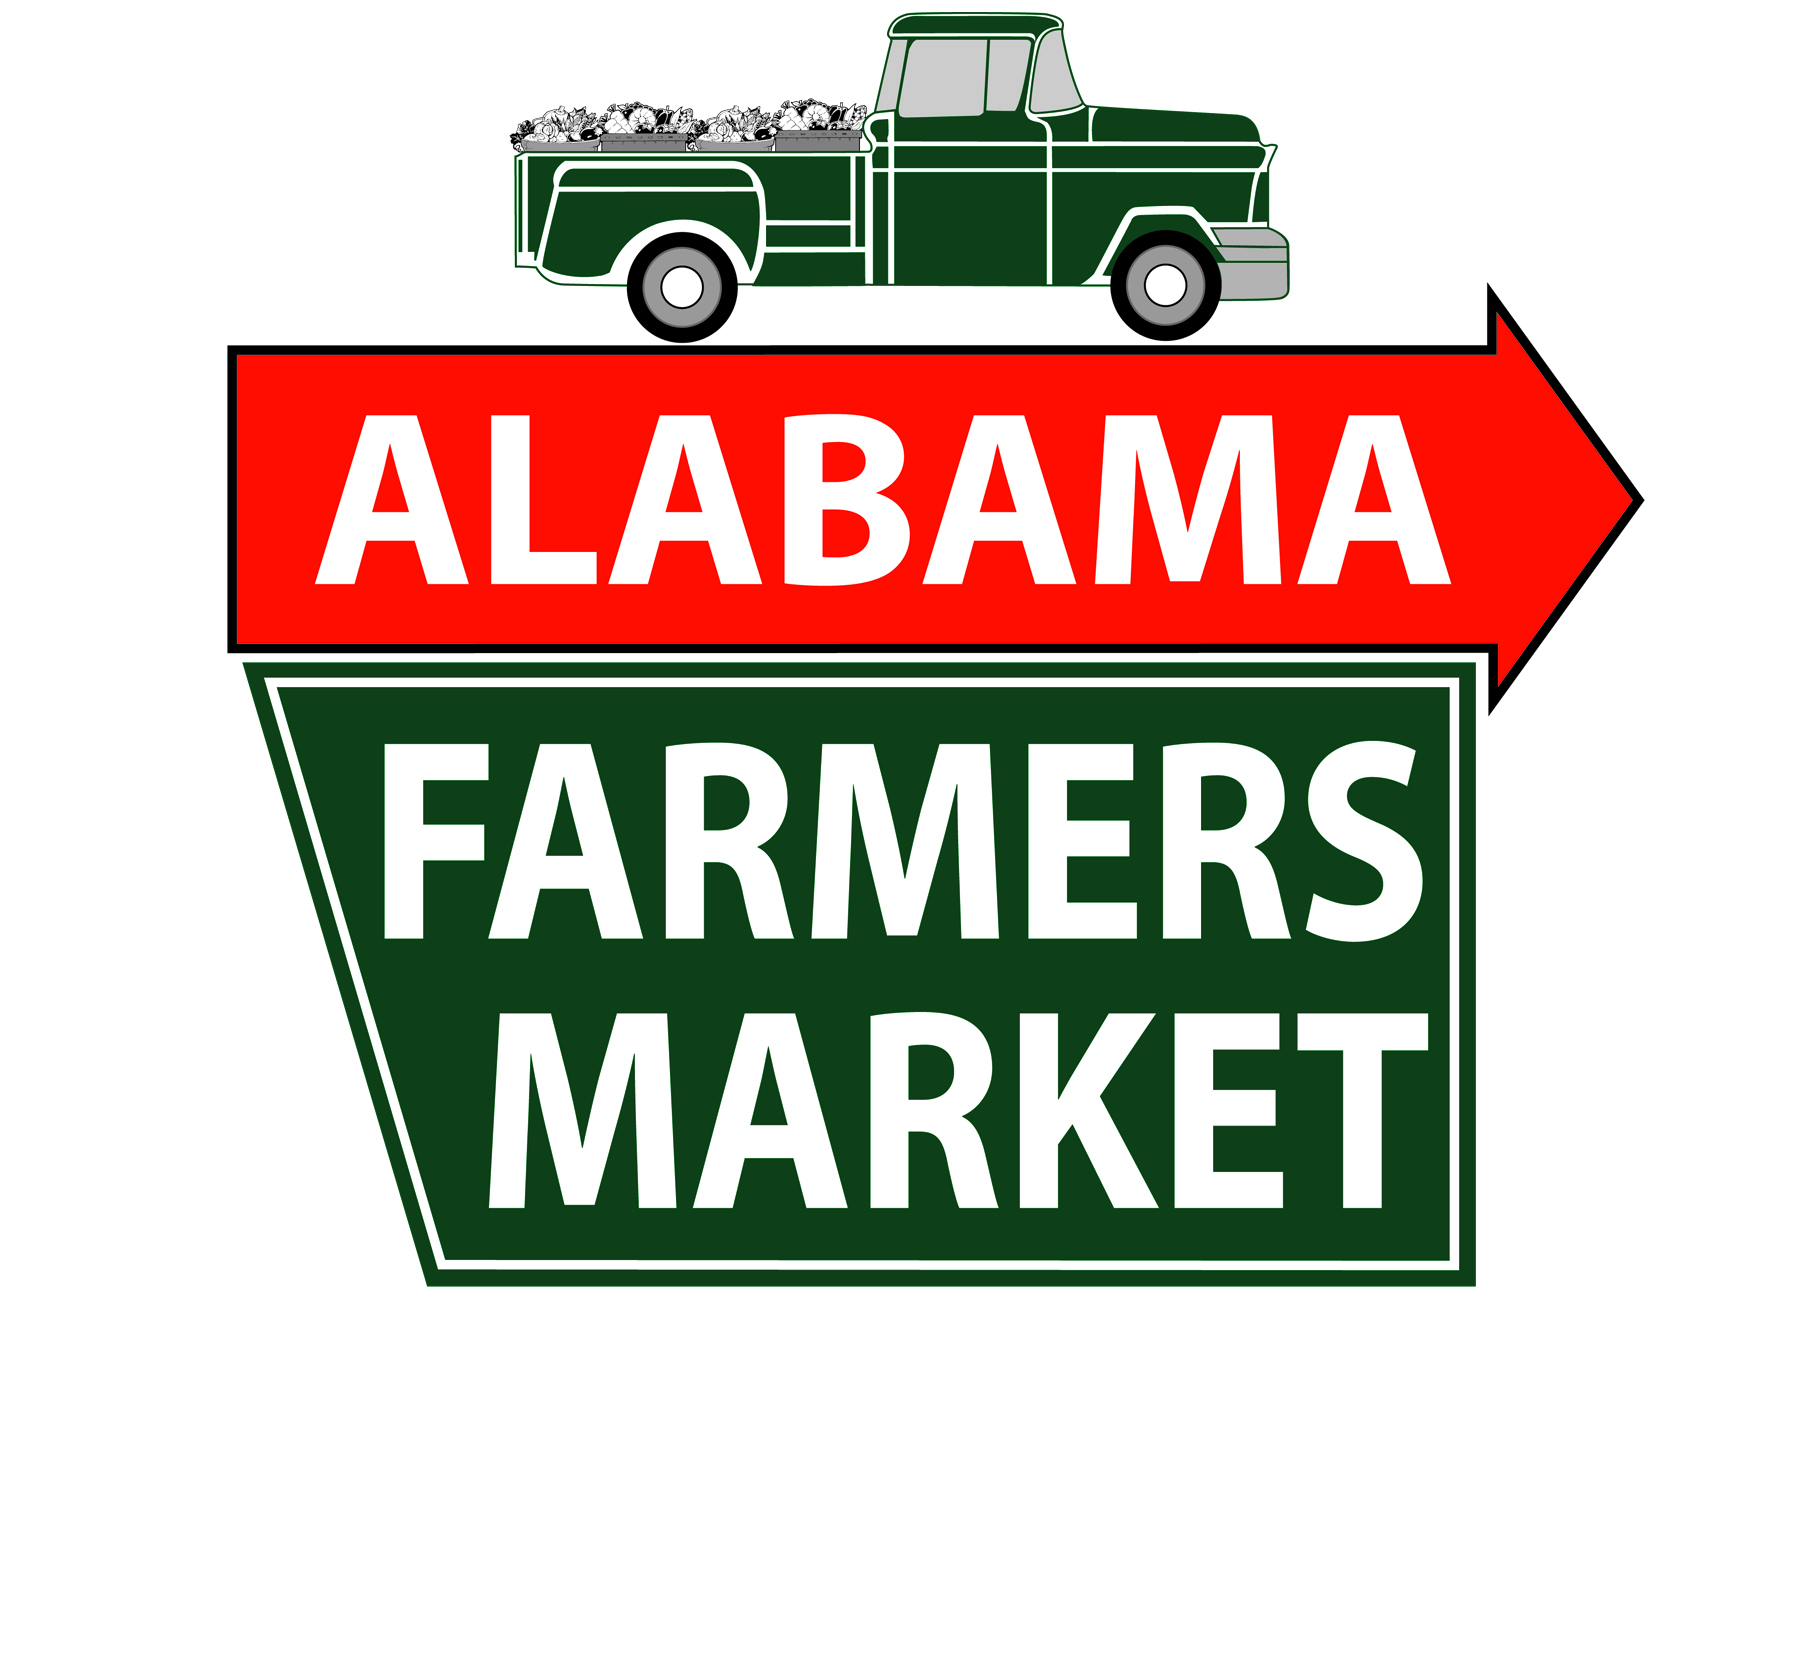 Alabama Farmers Market